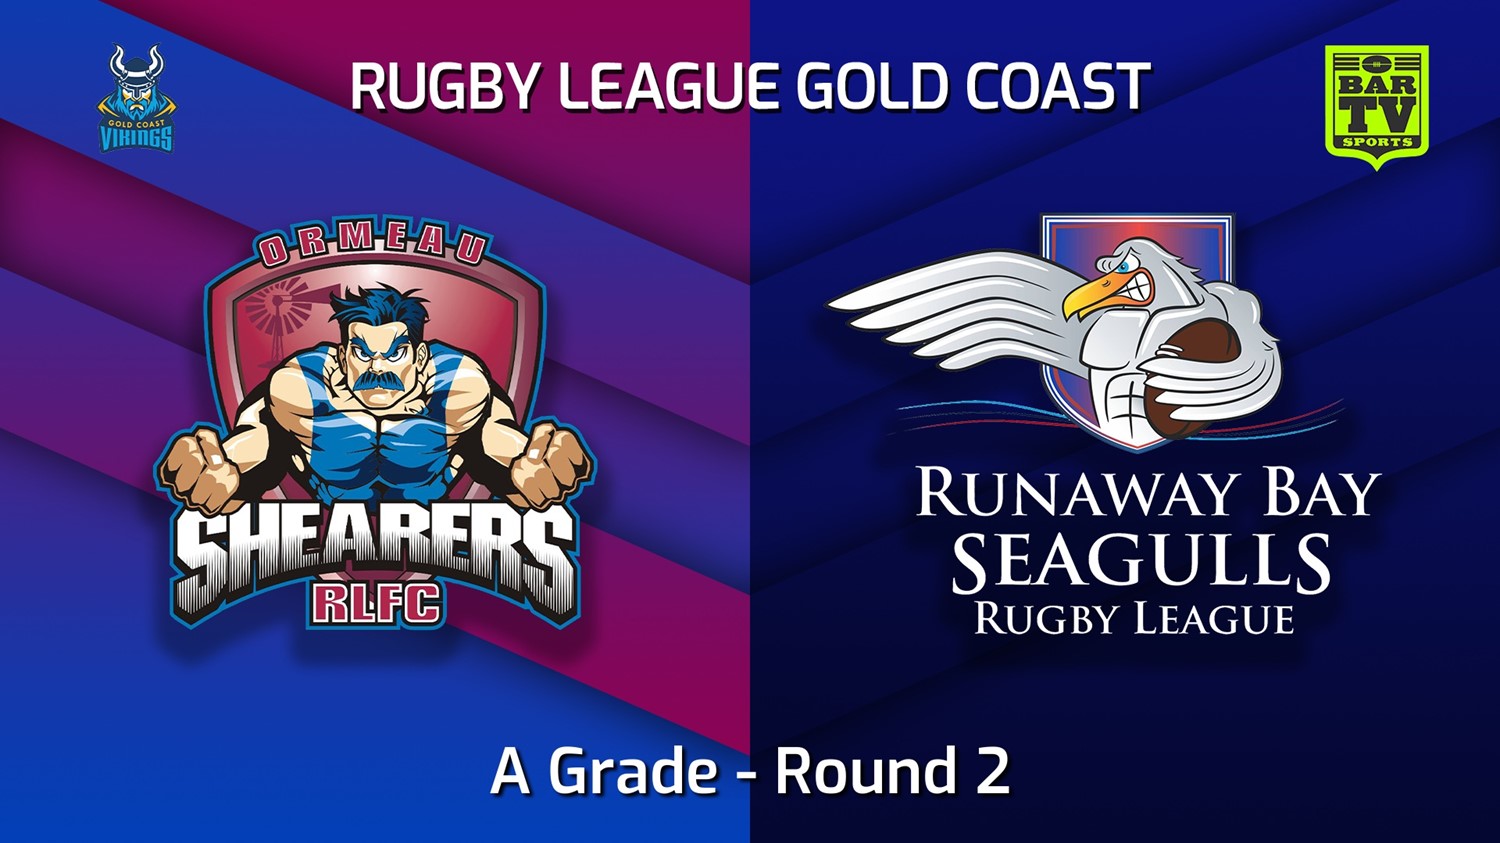 220403-Gold Coast Round 2 - A Grade - Ormeau Shearers v Runaway Bay Seagulls Minigame Slate Image